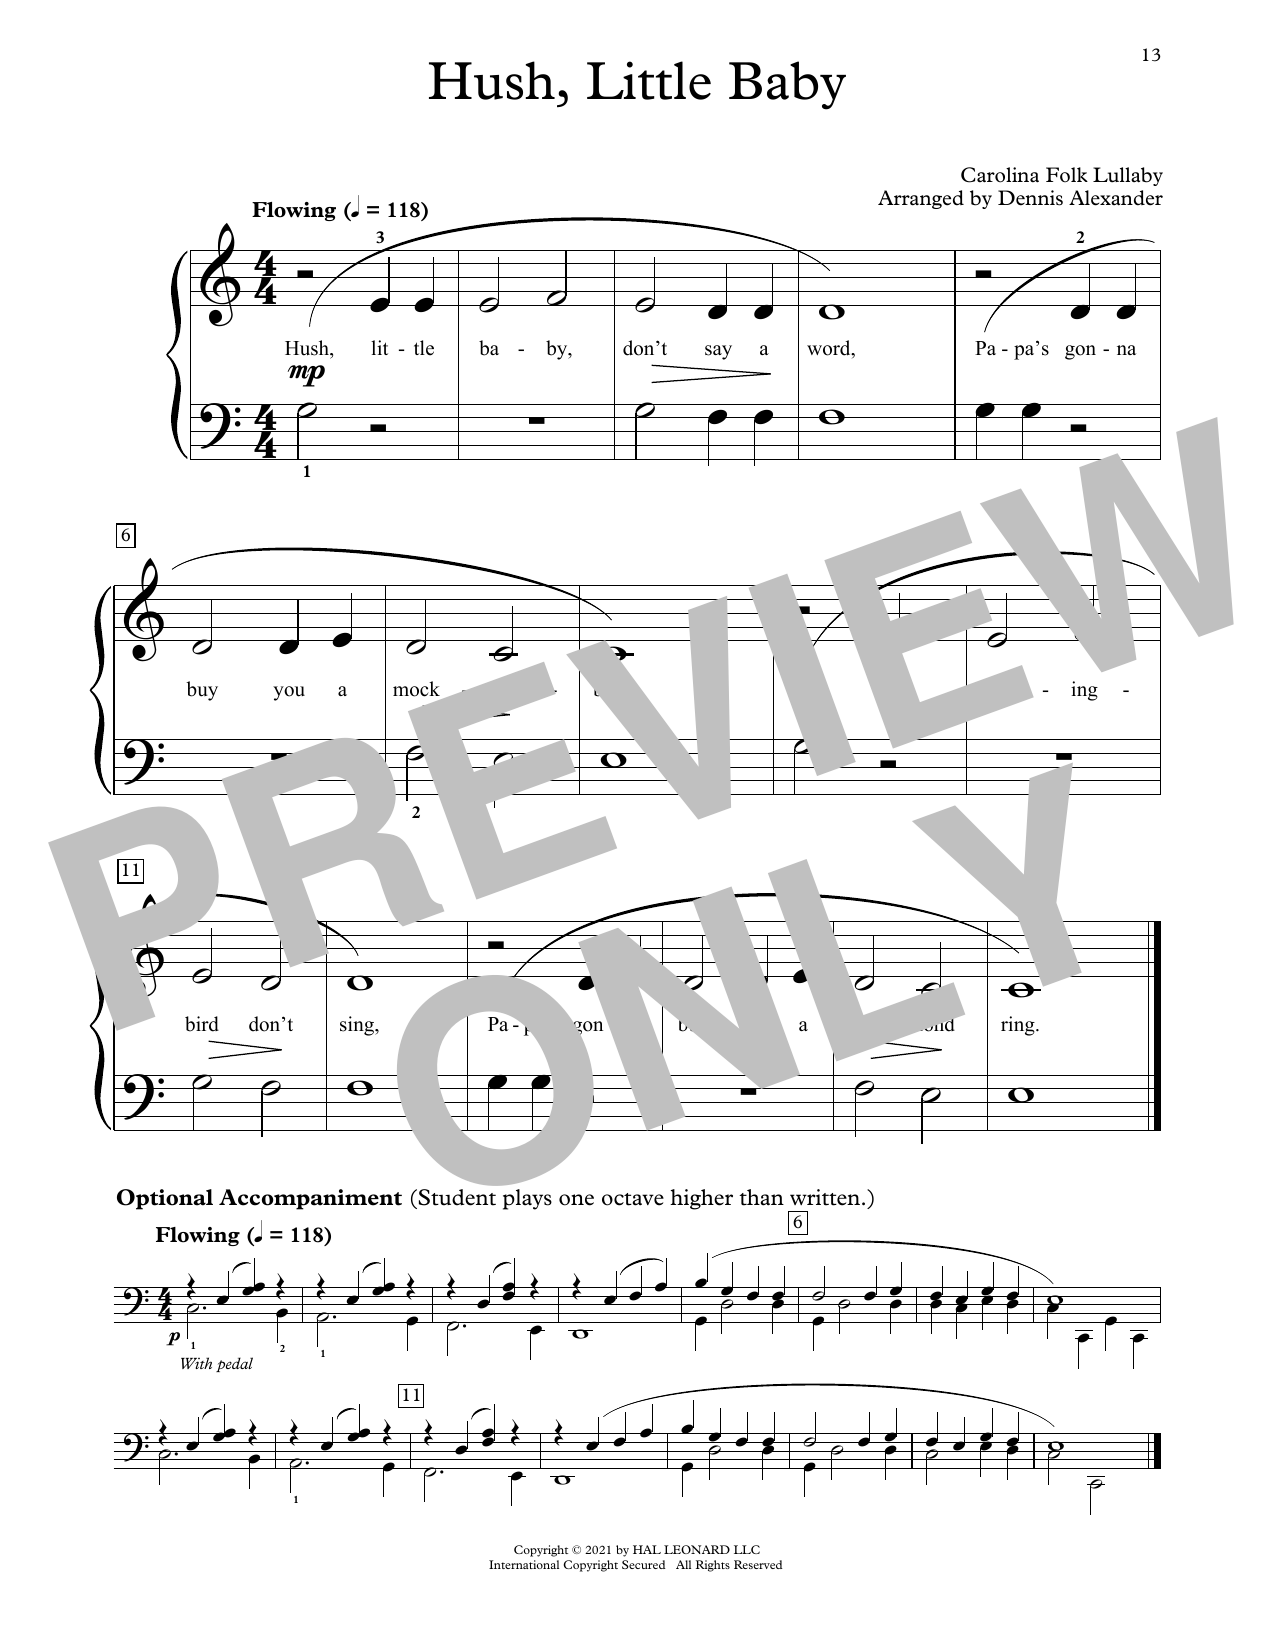 Carolina Folk Lullaby Hush, Little Baby (arr. Dennis Alexander) Sheet Music Notes & Chords for Educational Piano - Download or Print PDF